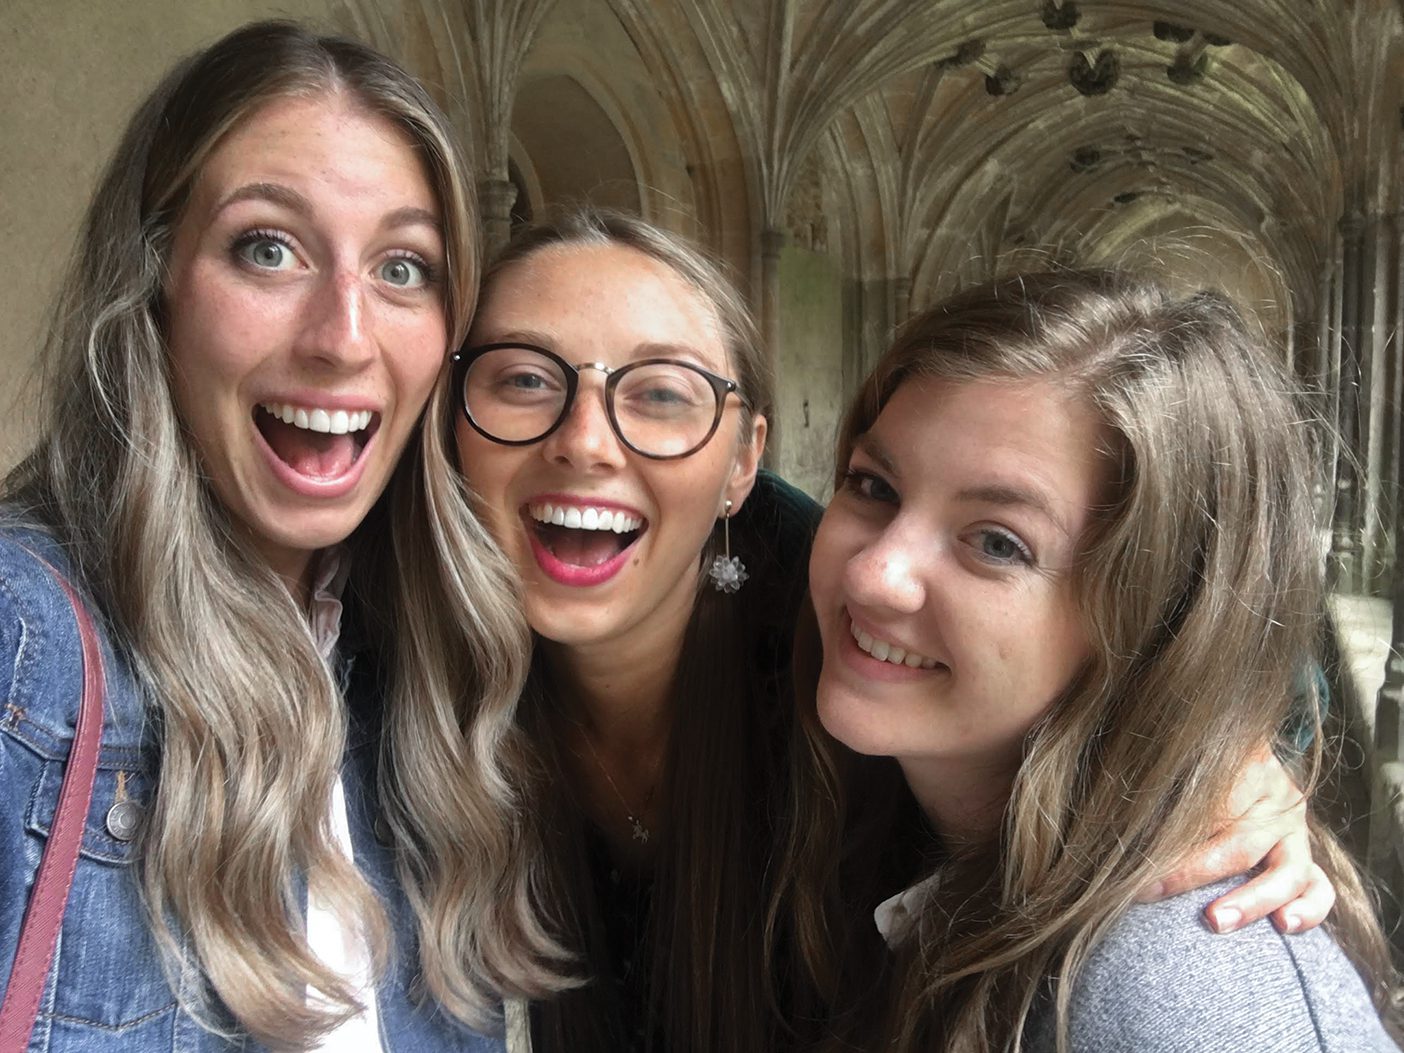 Devynn Dayton, Lexi Nilson, and Nicole Jacobson smiling brightly during their trip to England.